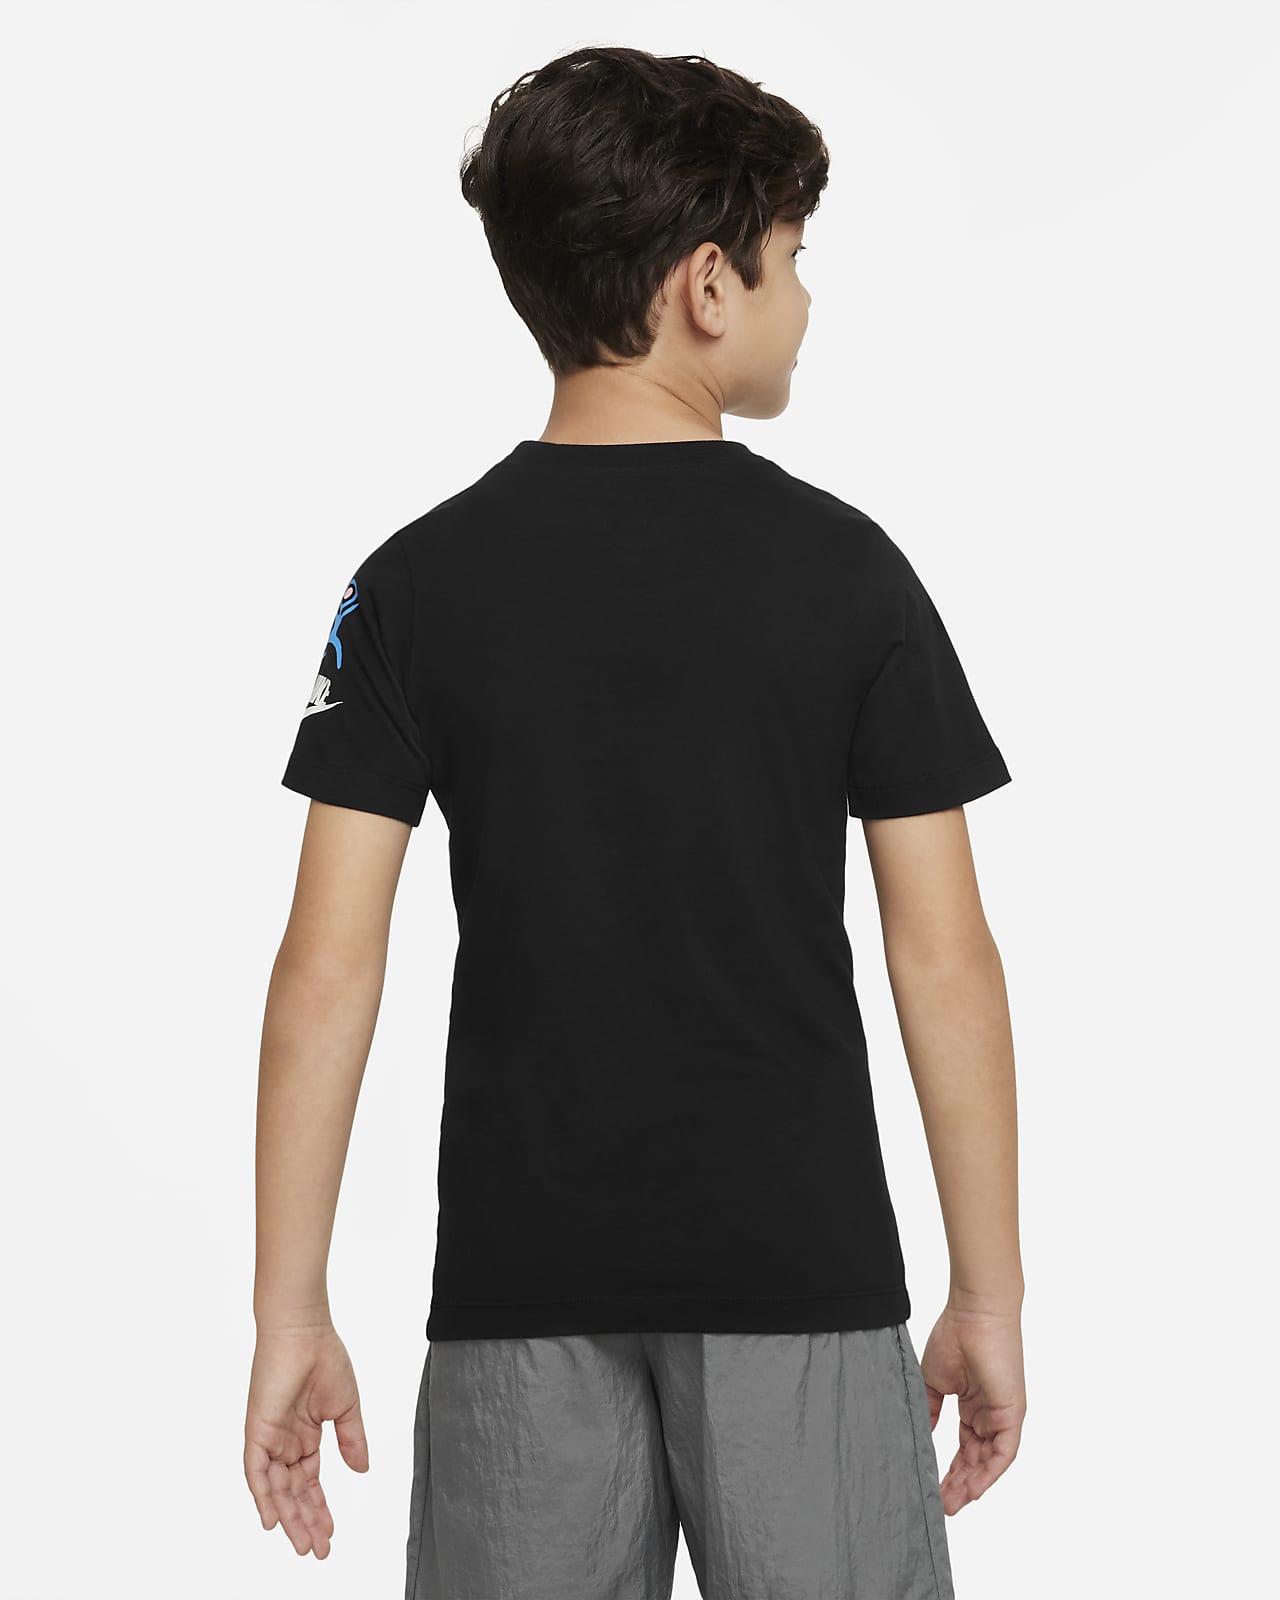 NIKE t-shirt Sportswear Black for boys